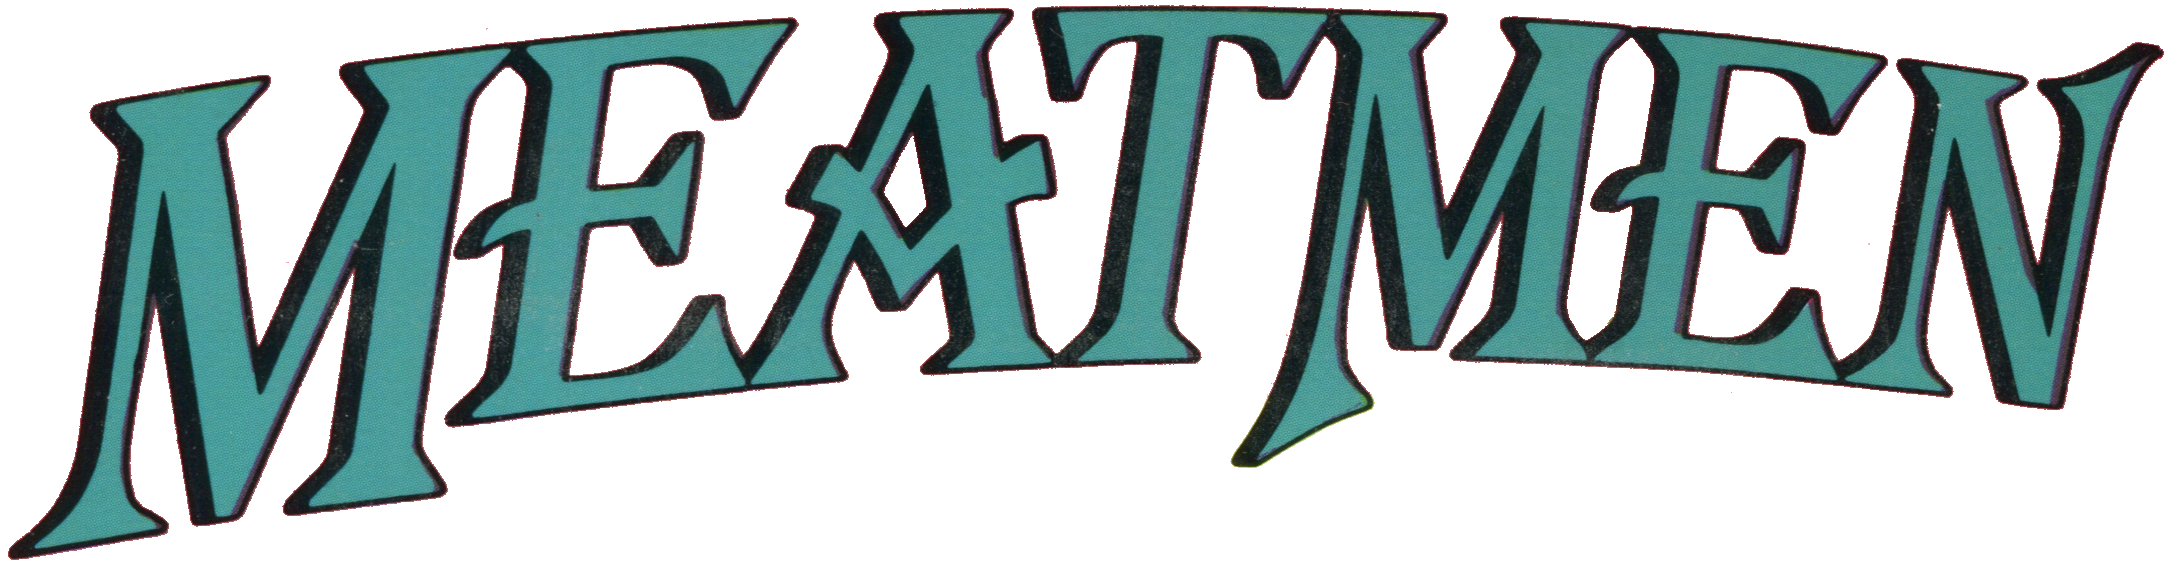 Click on Meatmen logo